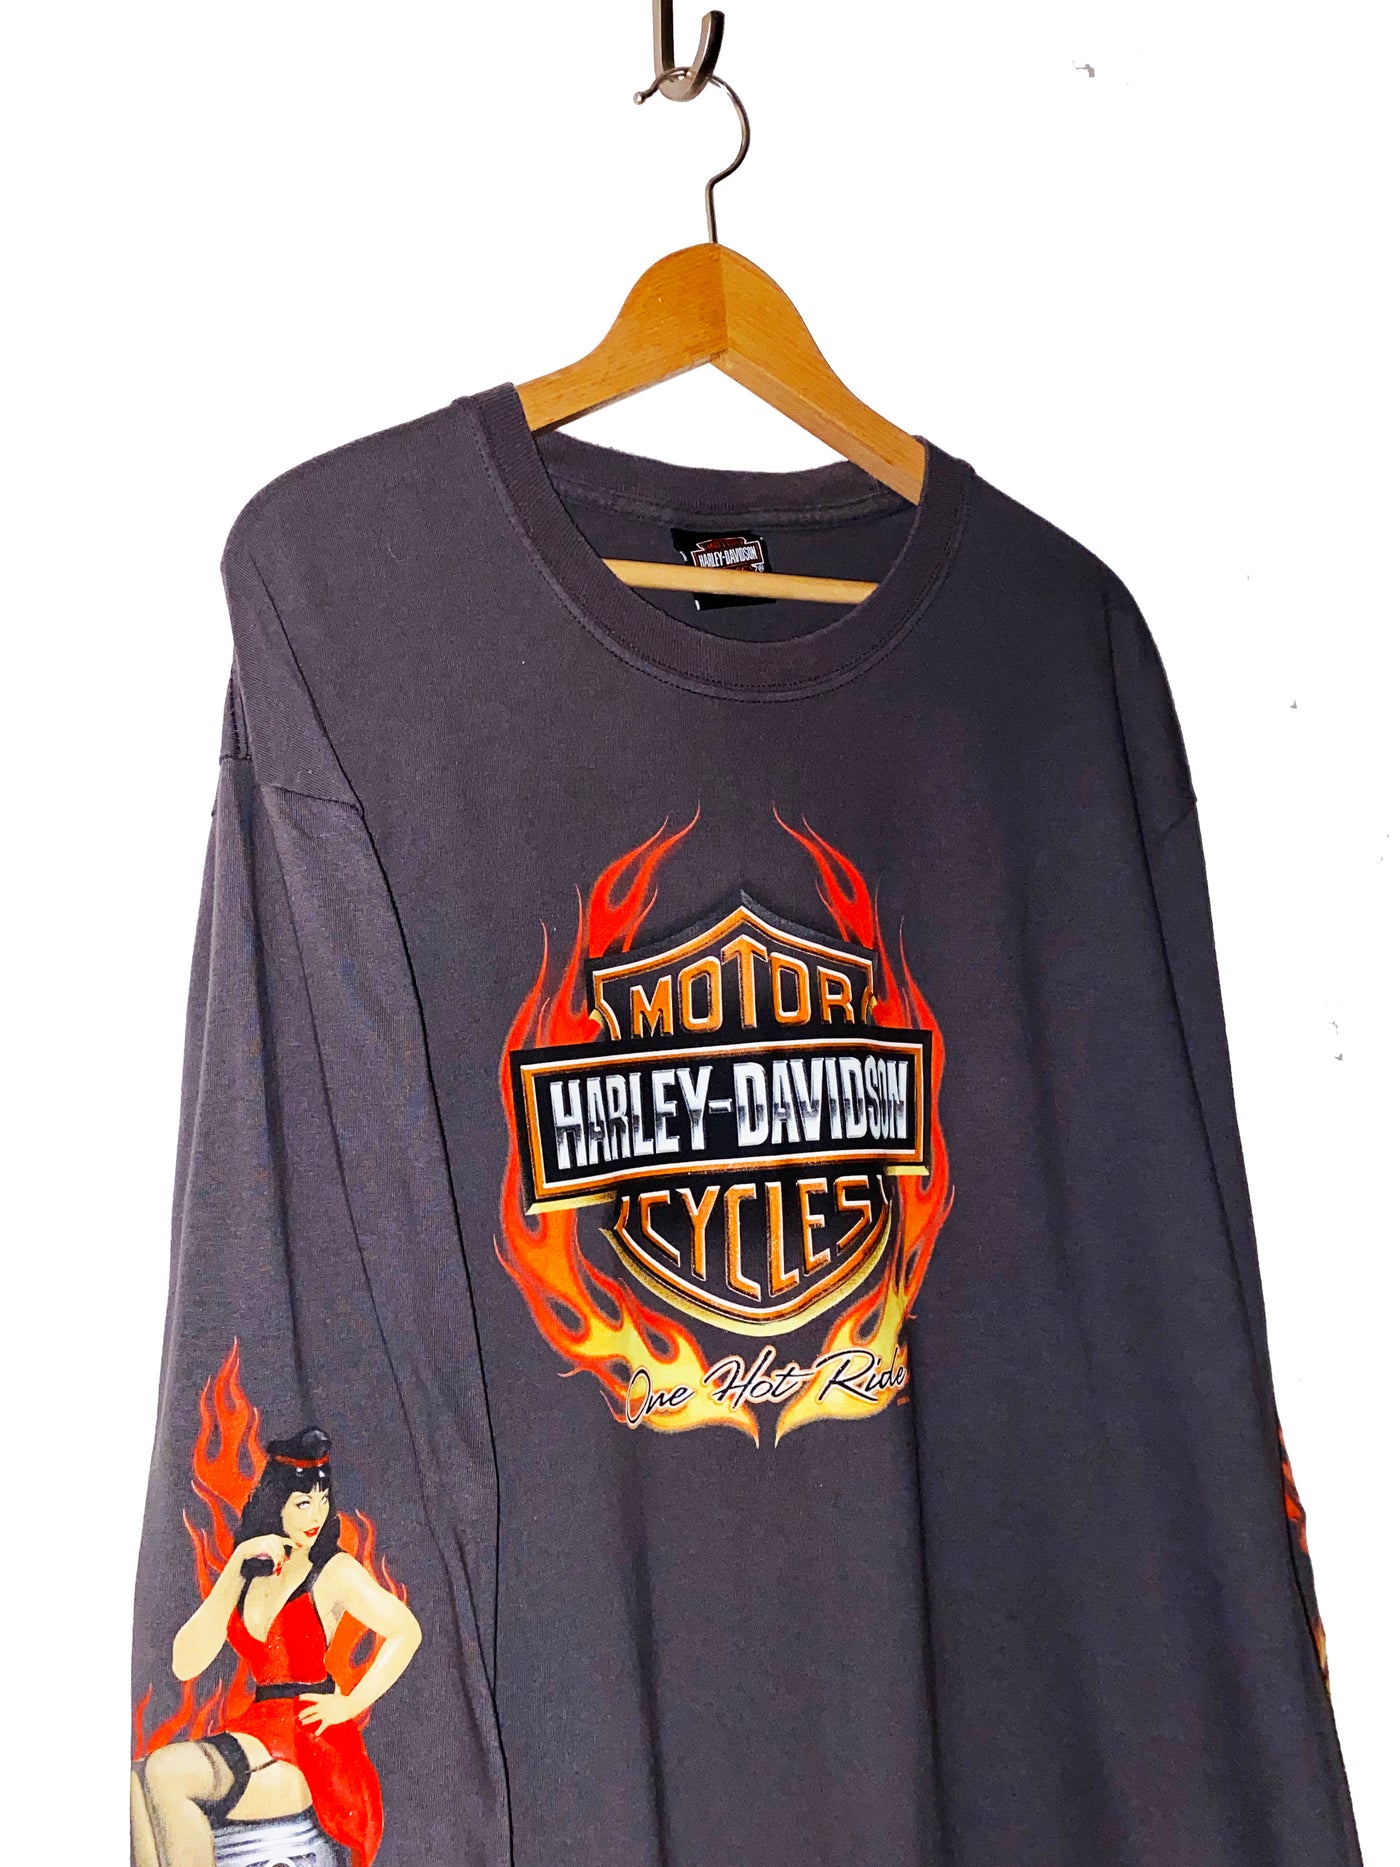 Harley Davidson ‘One Hot Ride’ Longsleeve Shirt